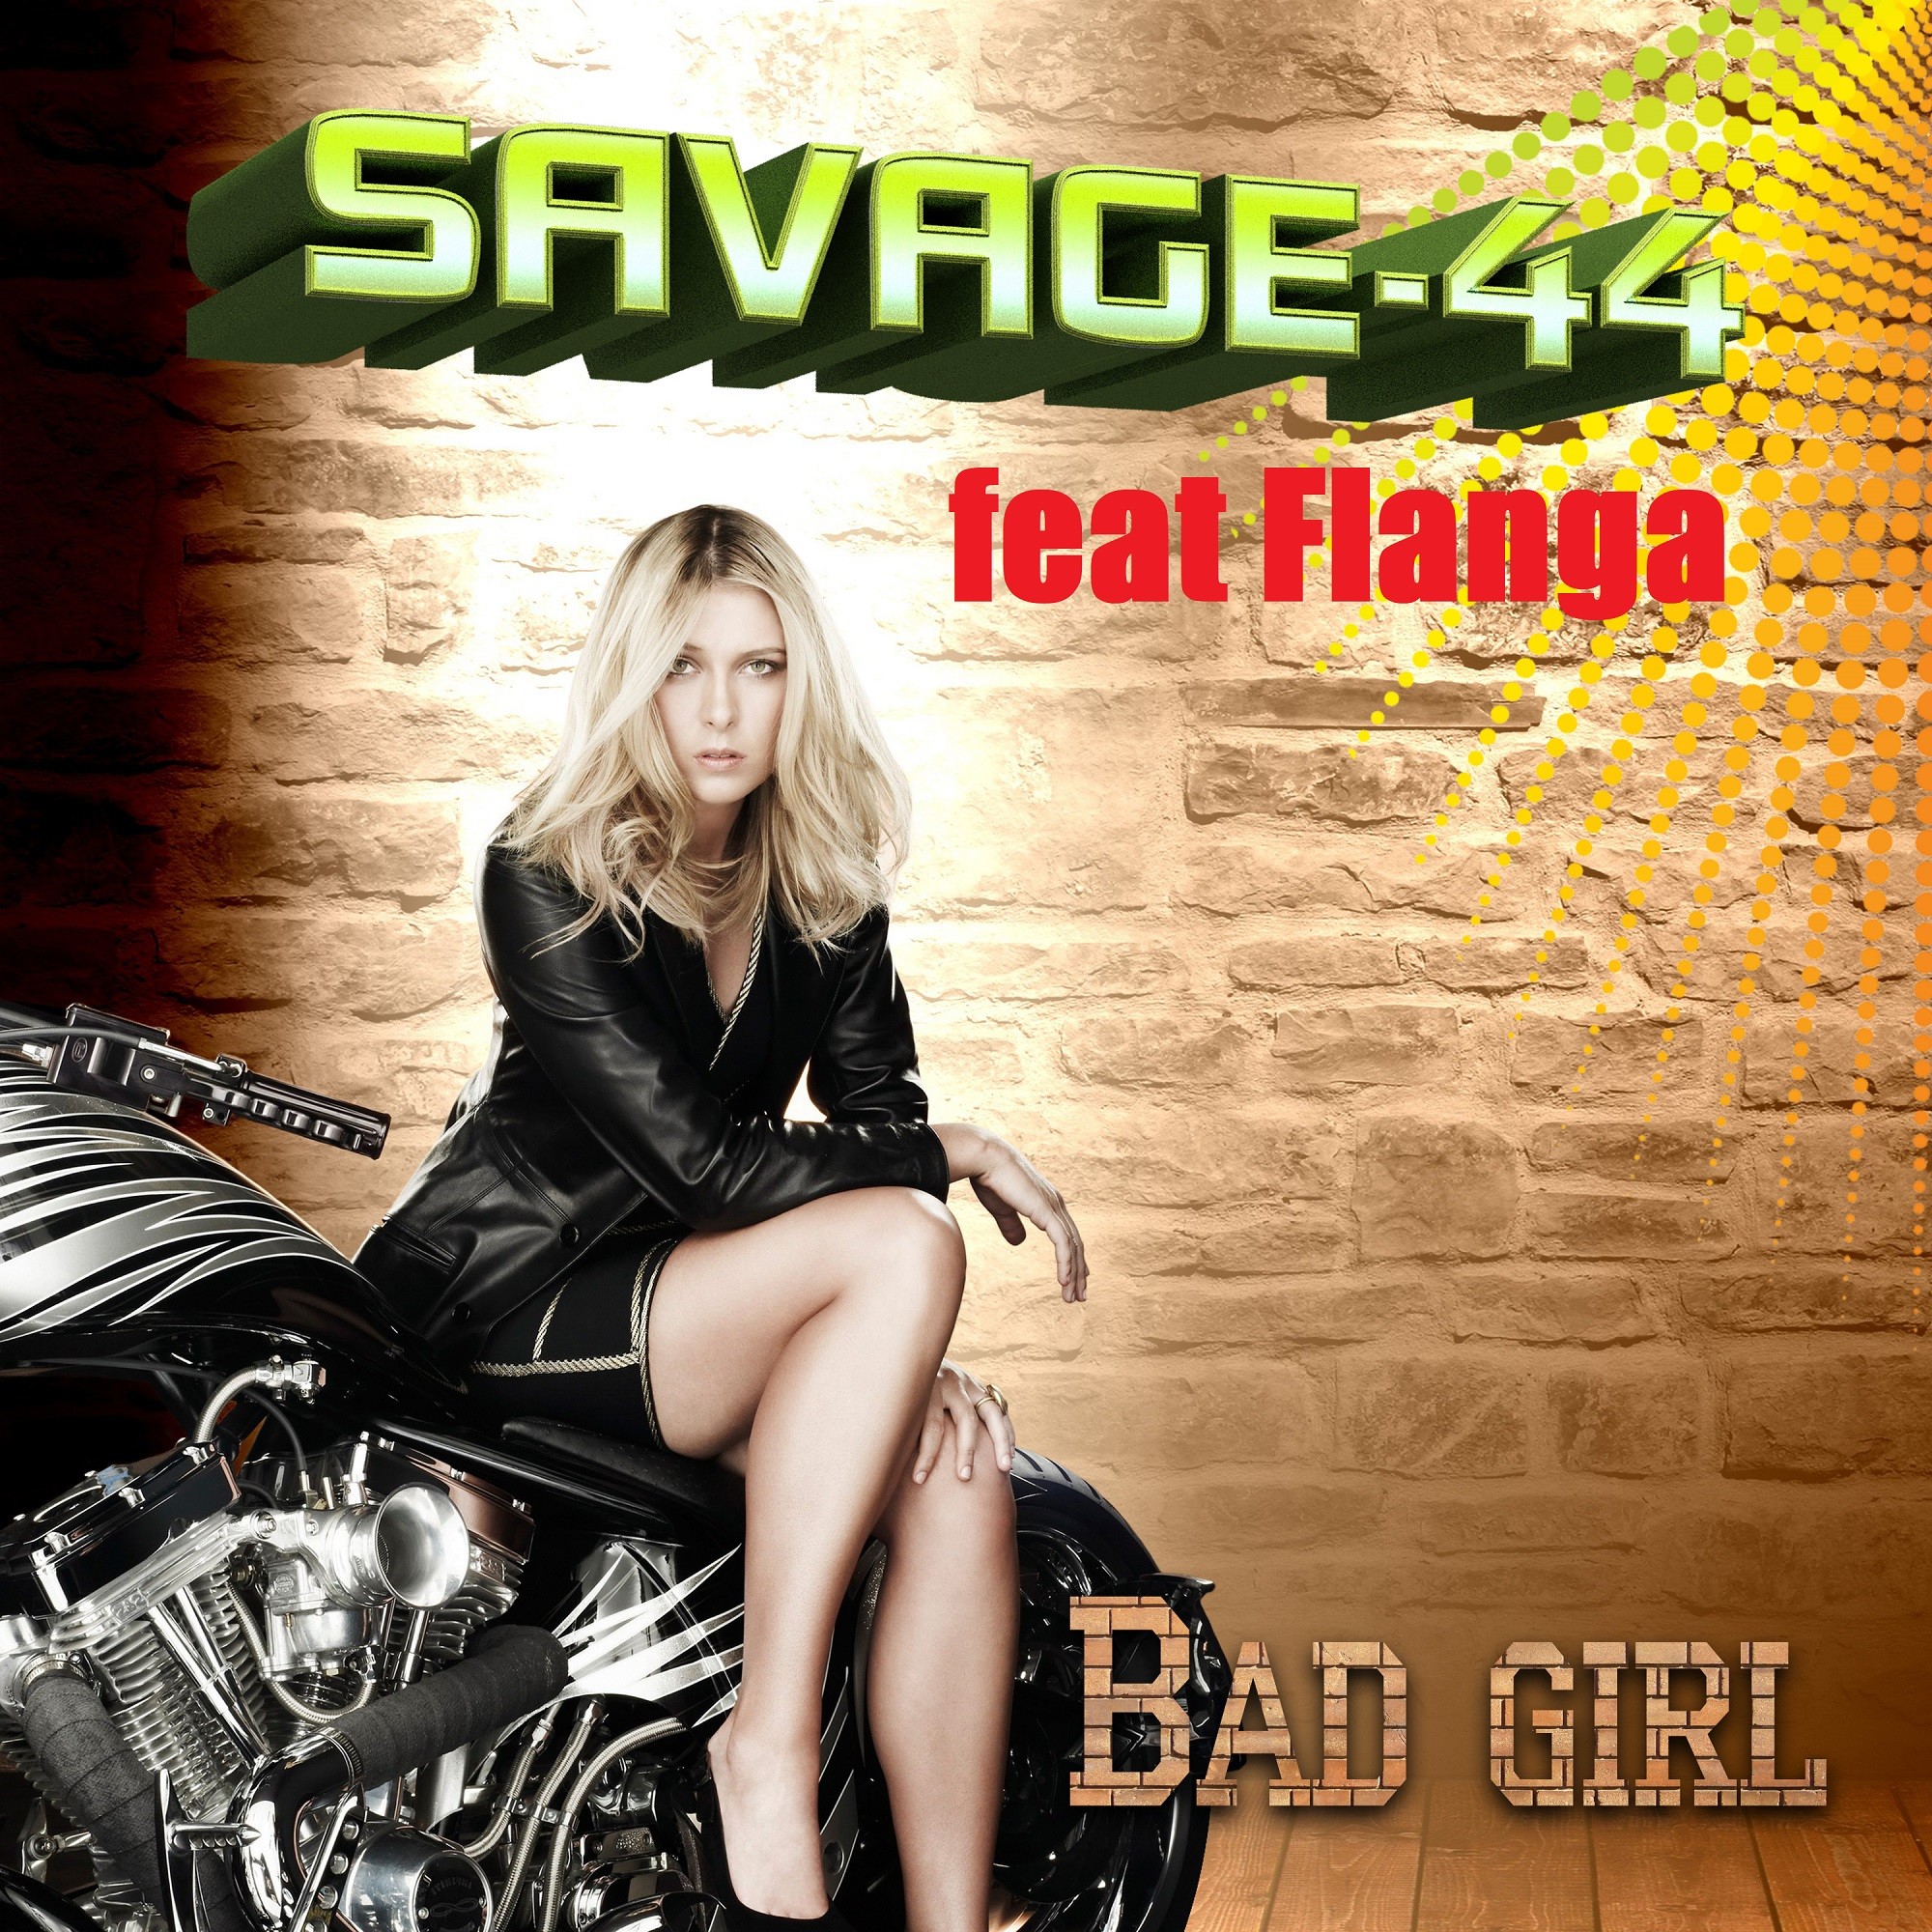 Savage 44 club drive new. Savage 44. Девушки из Savage. Девушка из группы Savage-44.